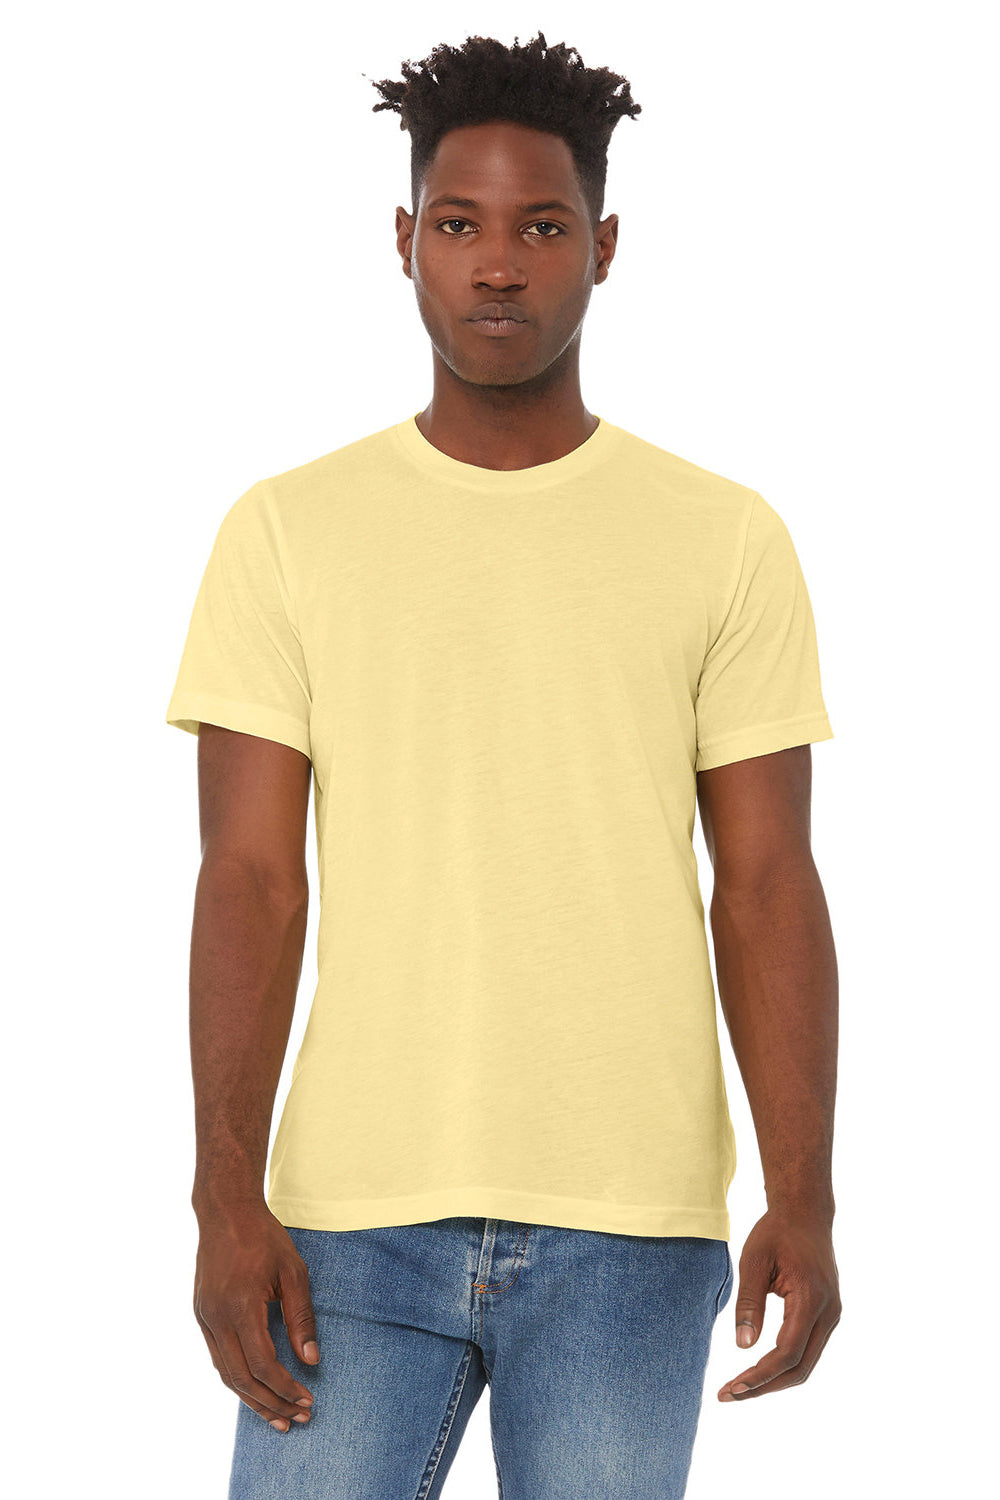 Bella + Canvas BC3413/3413C/3413 Mens Short Sleeve Crewneck T-Shirt Pale Yellow Model Front